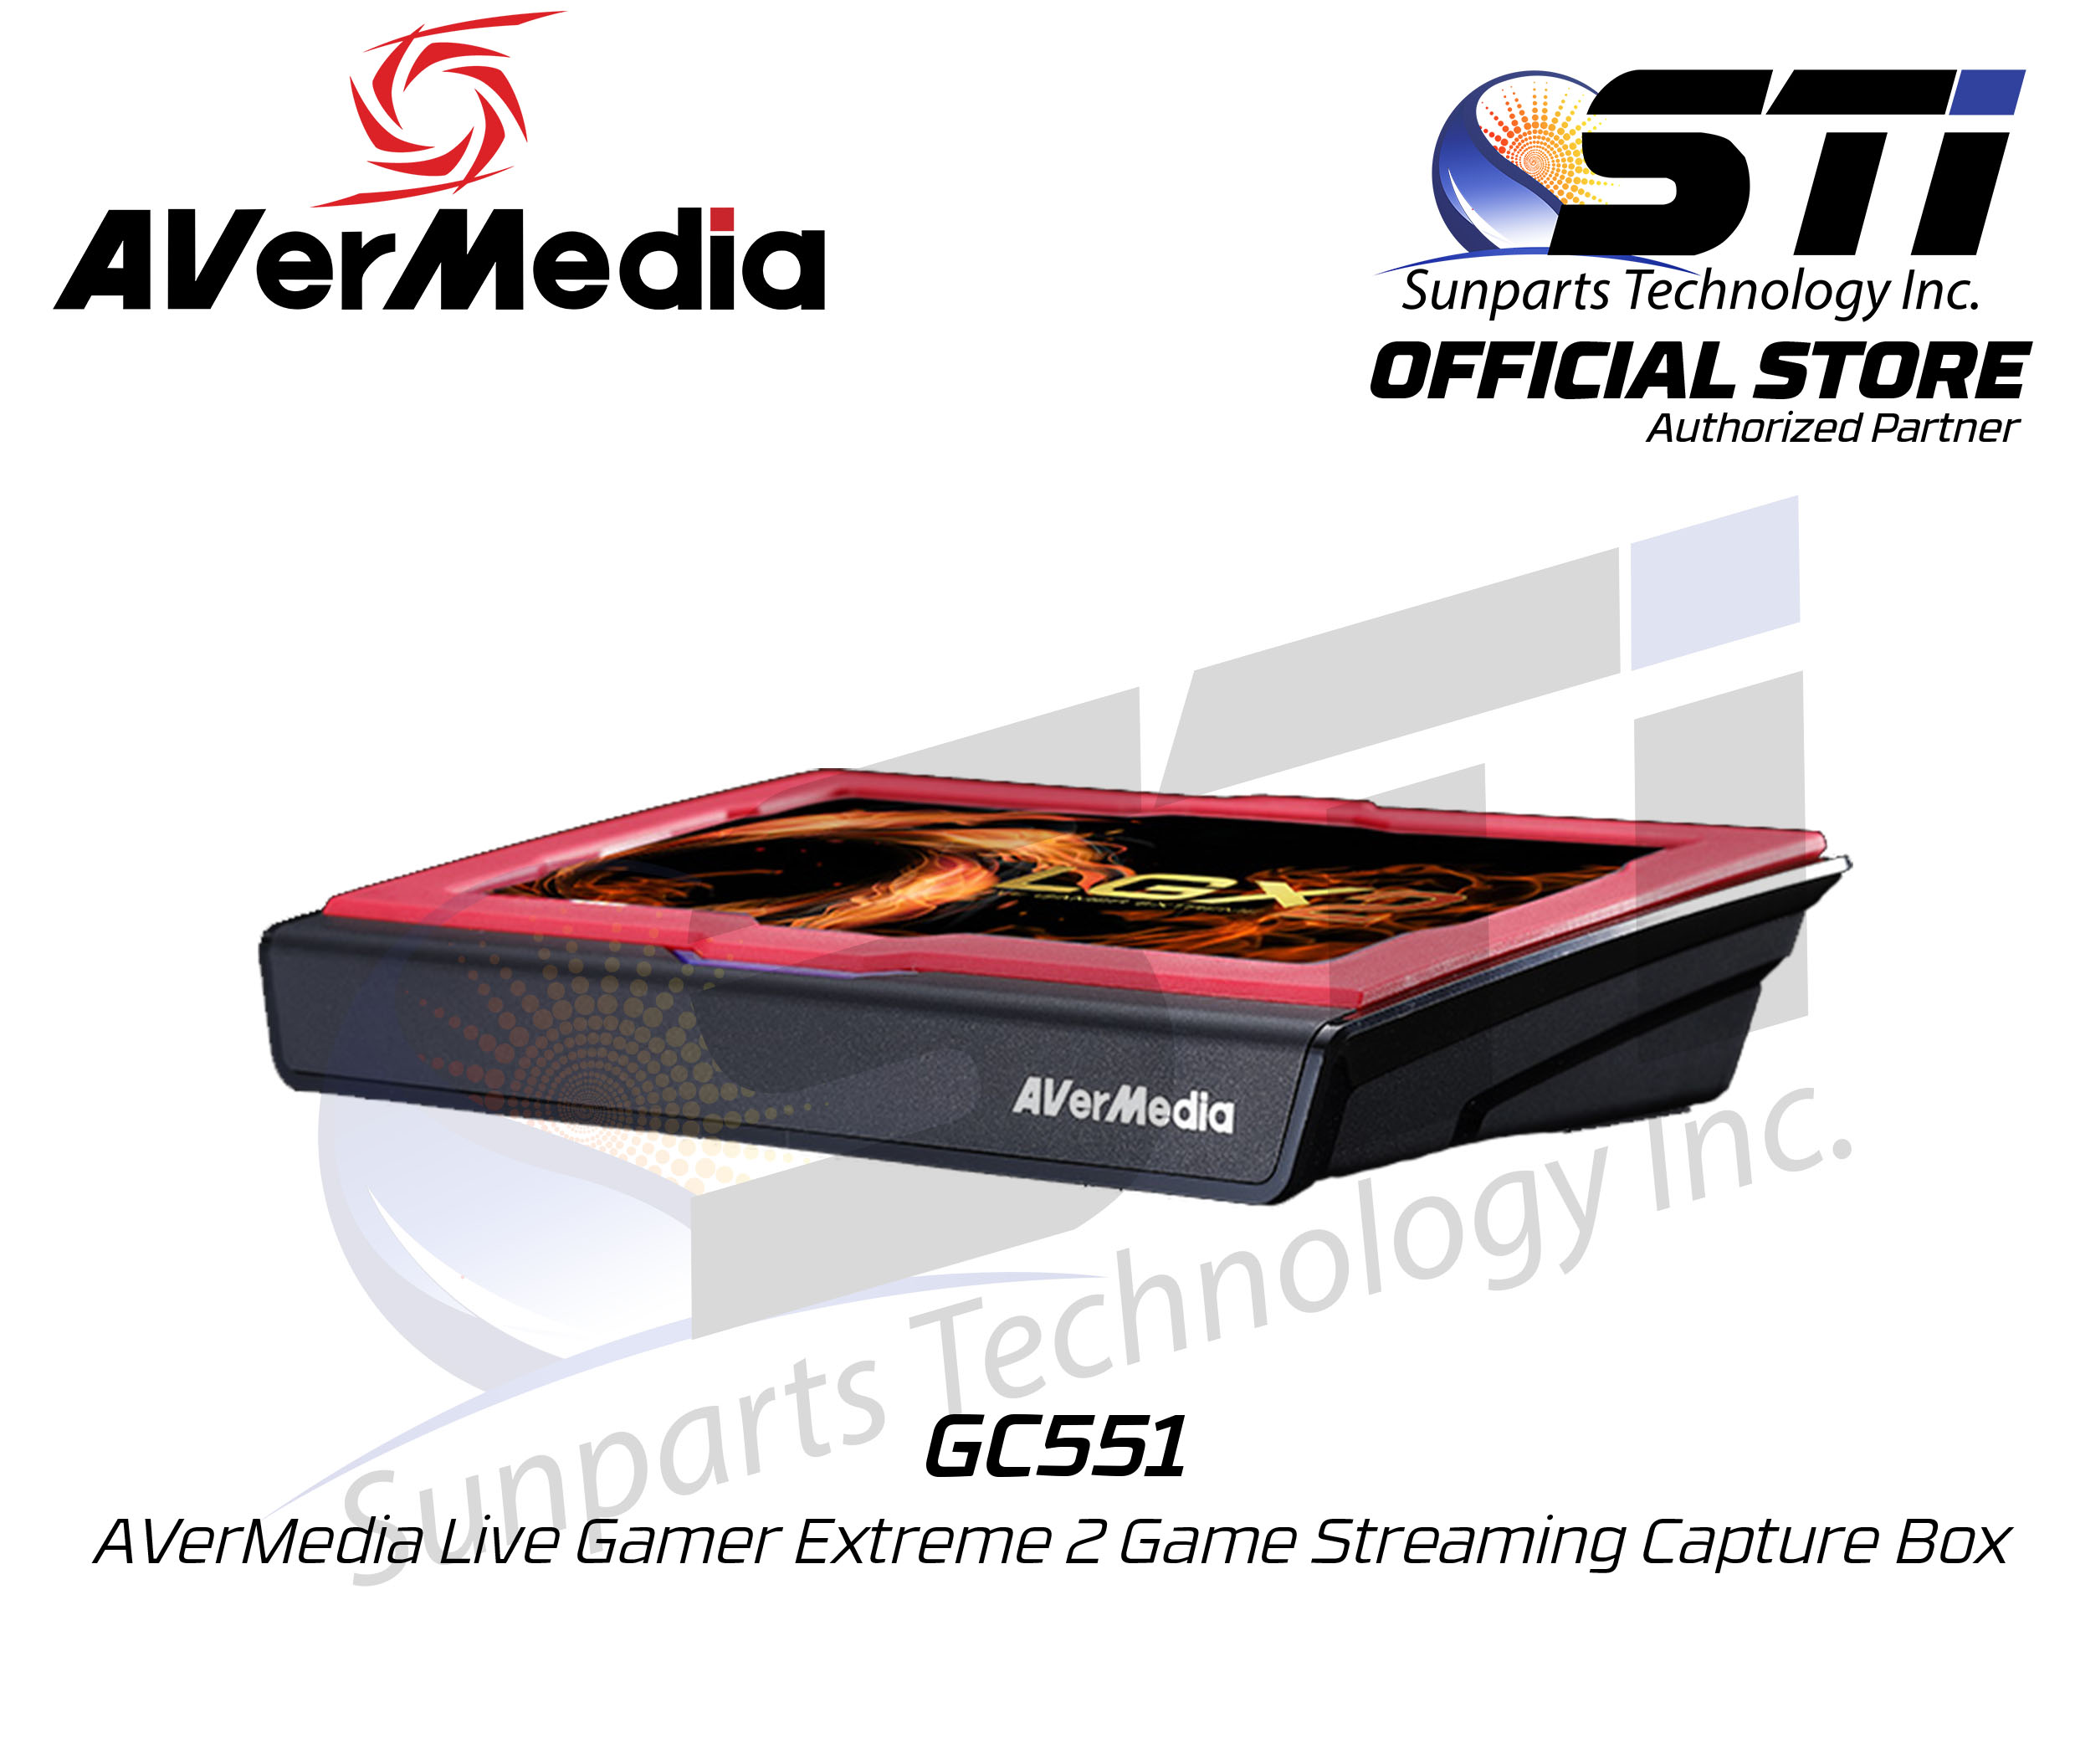 GC551 AVerMedia Live Gamer Extreme 2 Game Streaming Capture Box